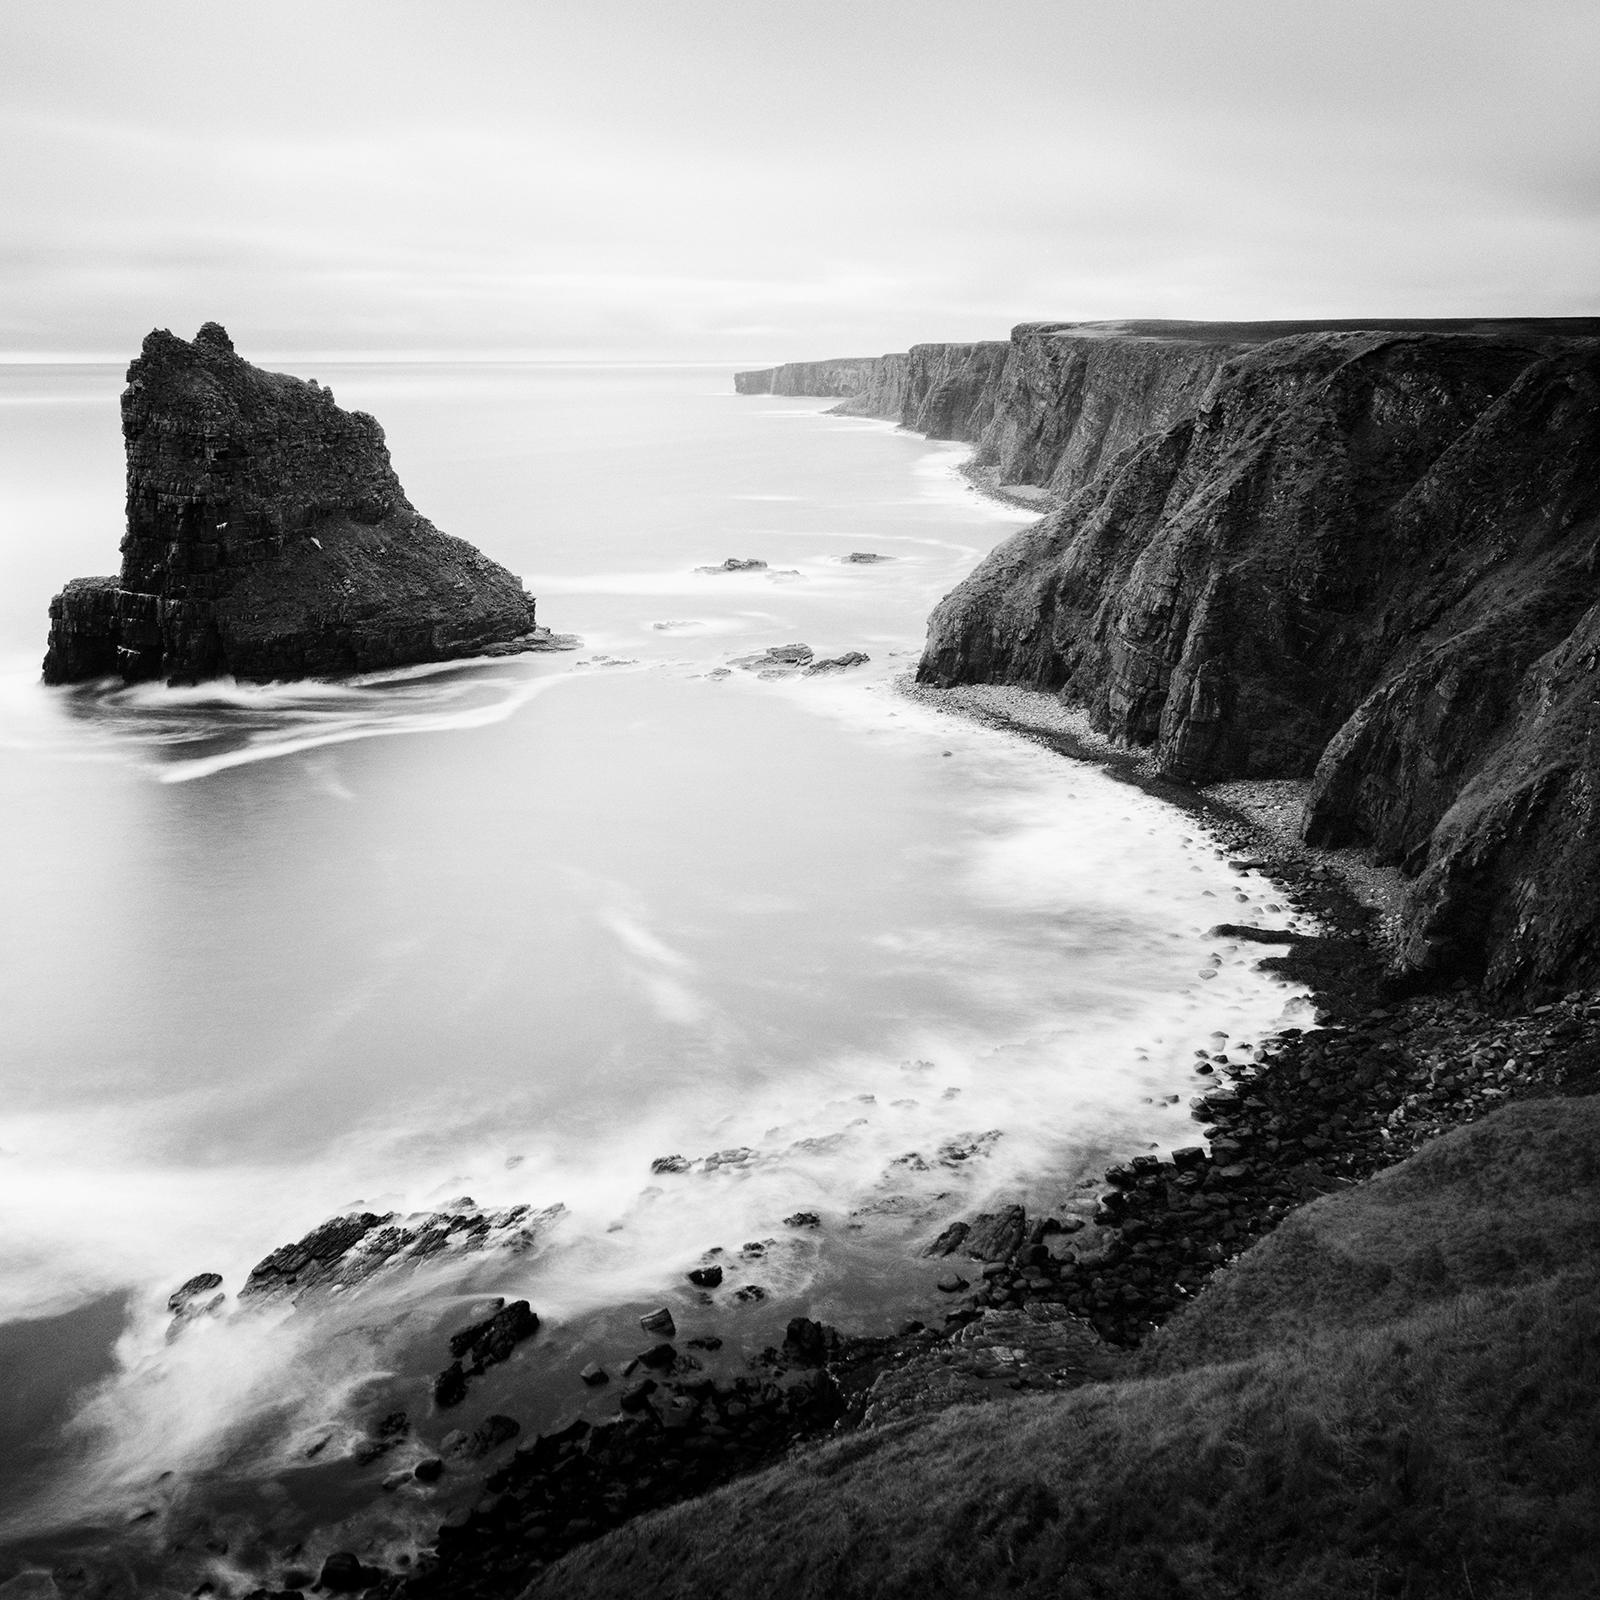 Surreal Moment, scottish coastline cliff, black and white photography, landscape For Sale 3